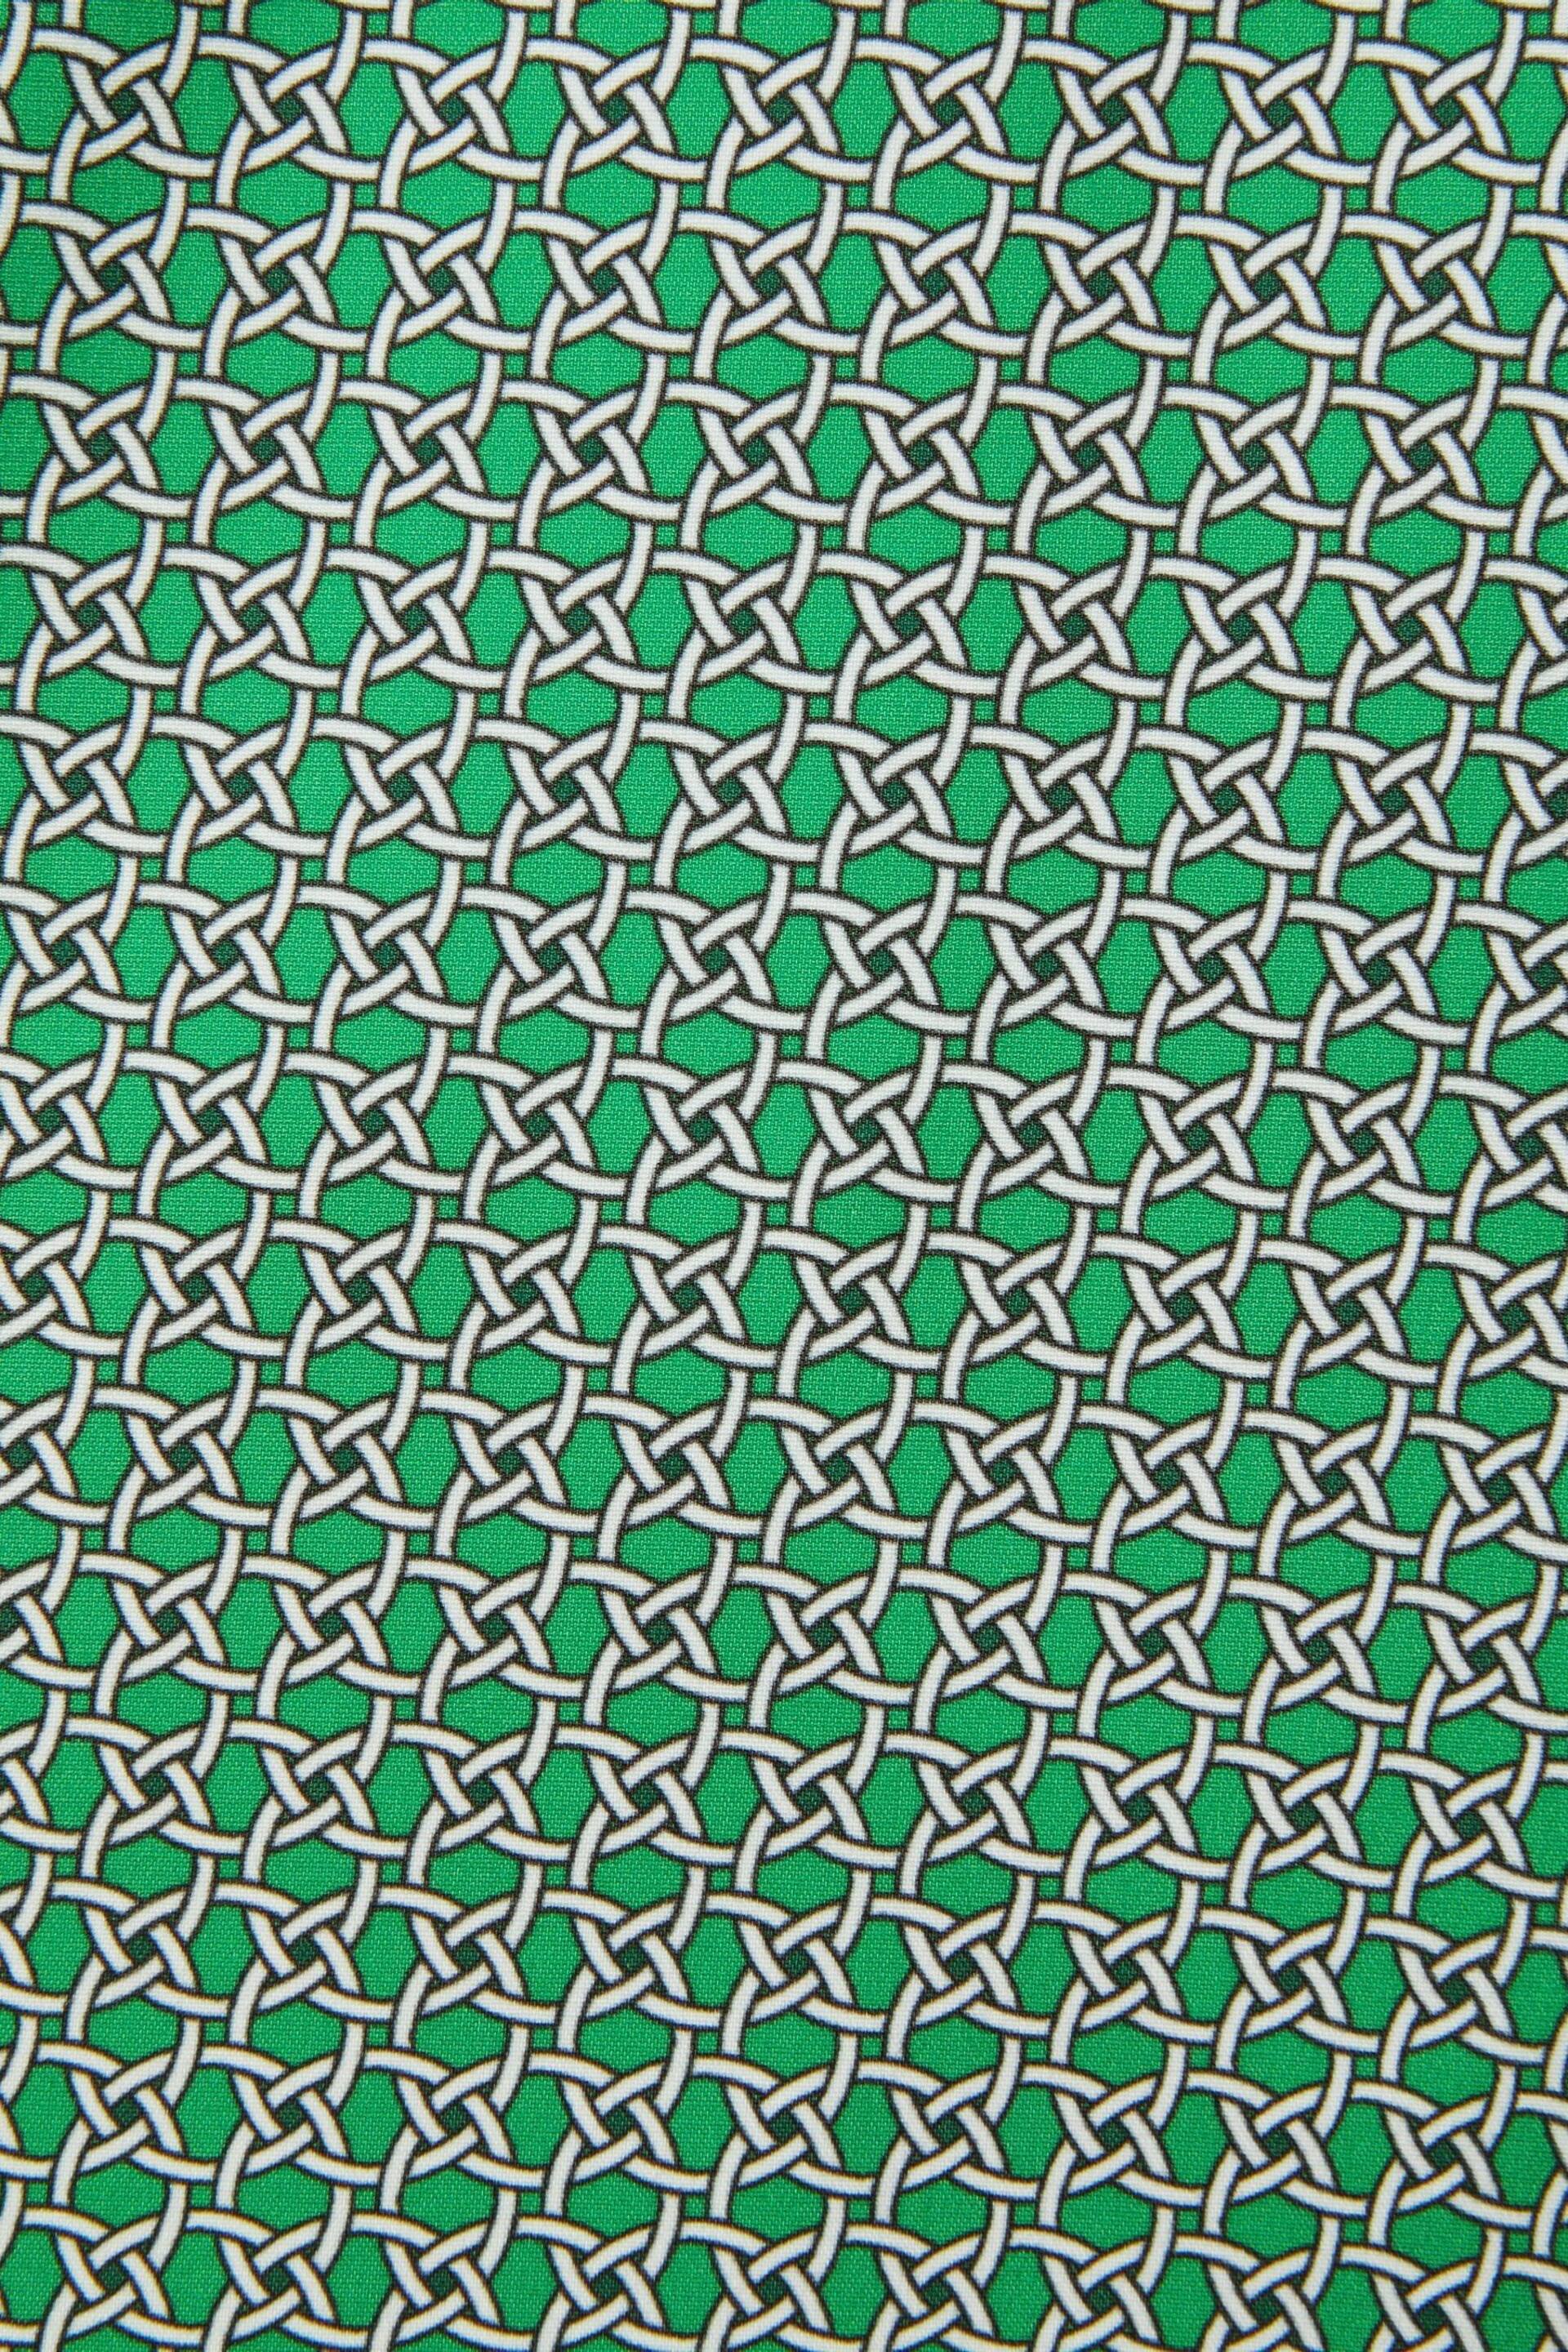 Reiss Bright Green/White Shape Printed Drawstring Swim Shorts - Image 6 of 6